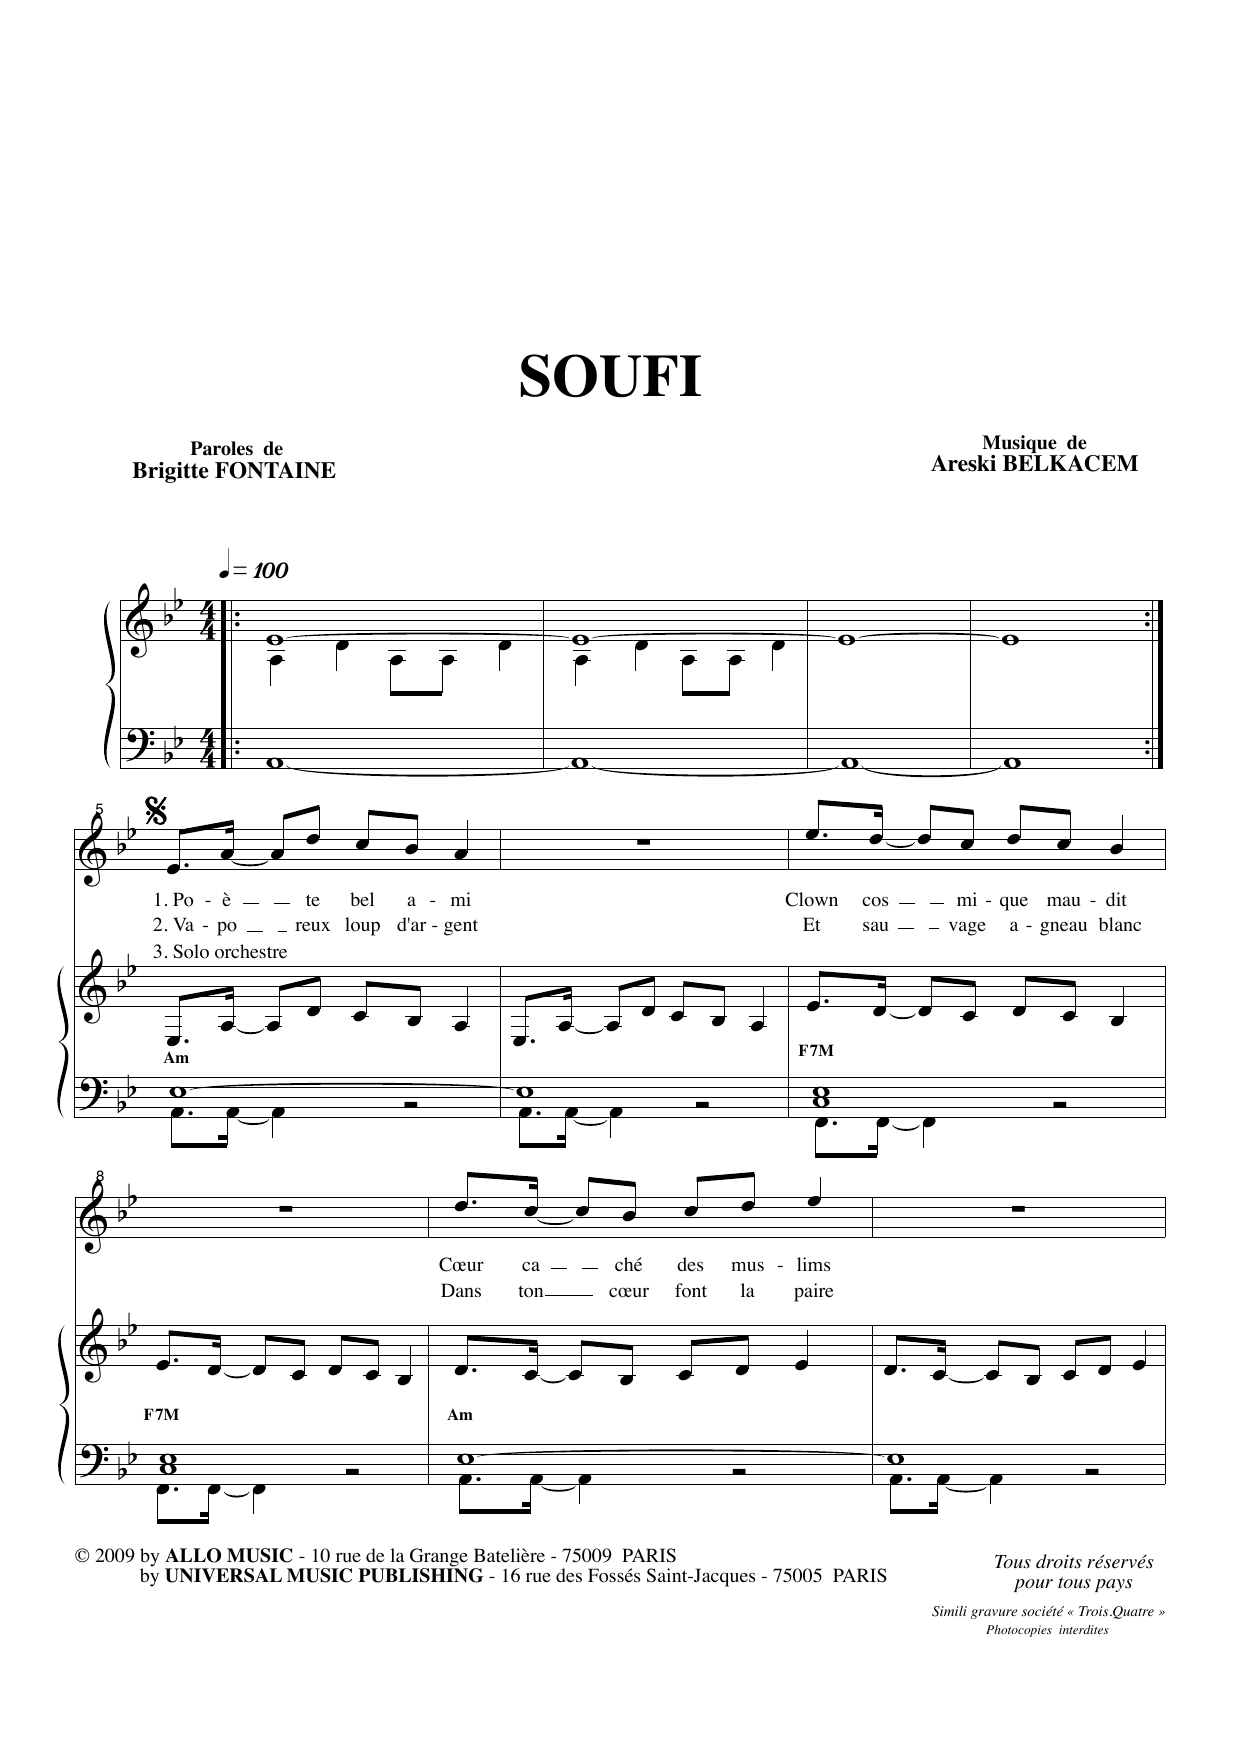 Brigitte Fontaine & Areski Belkacem Soufi Sheet Music Notes & Chords for Piano & Vocal - Download or Print PDF